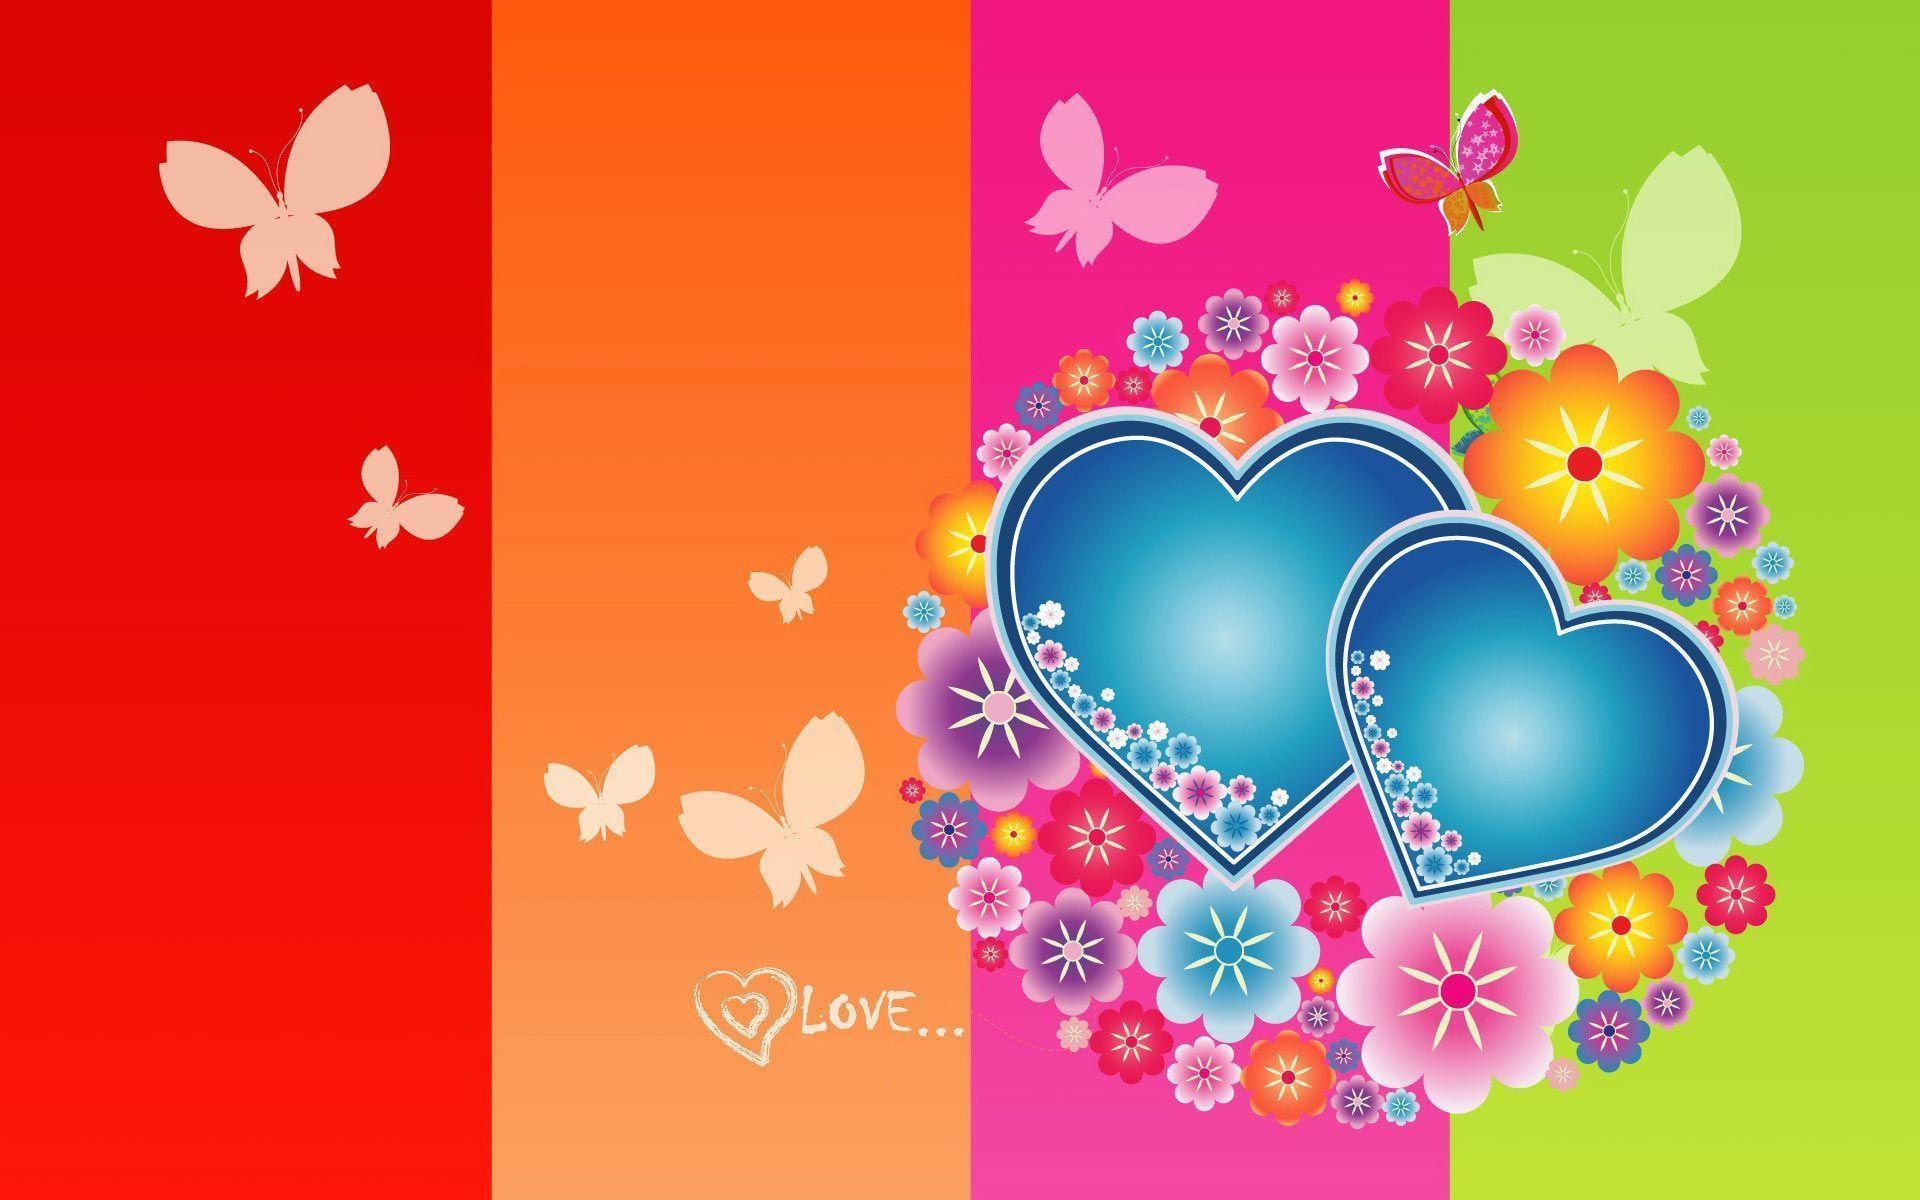 Free Download love holiday valentine backgrounds desktop wallpapers